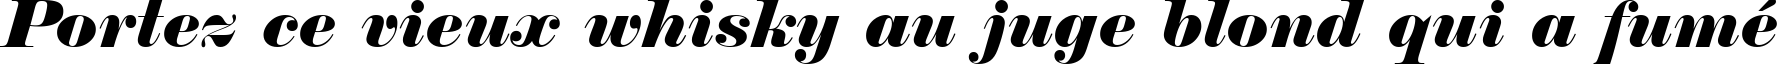 Пример написания шрифтом Normande Italic BT текста на французском